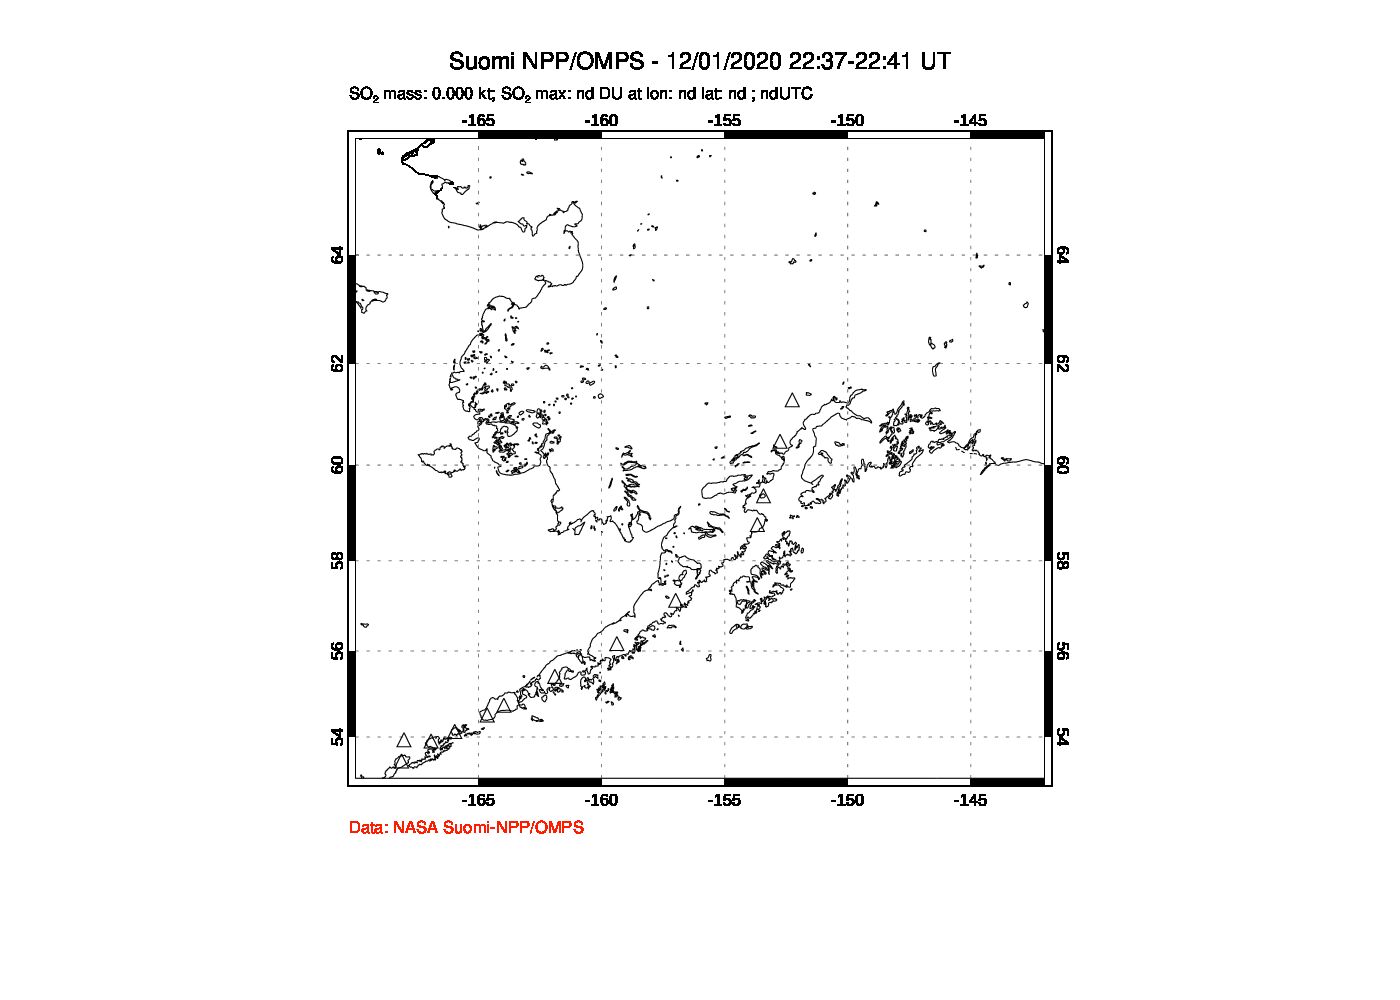 A sulfur dioxide image over Alaska, USA on Dec 01, 2020.